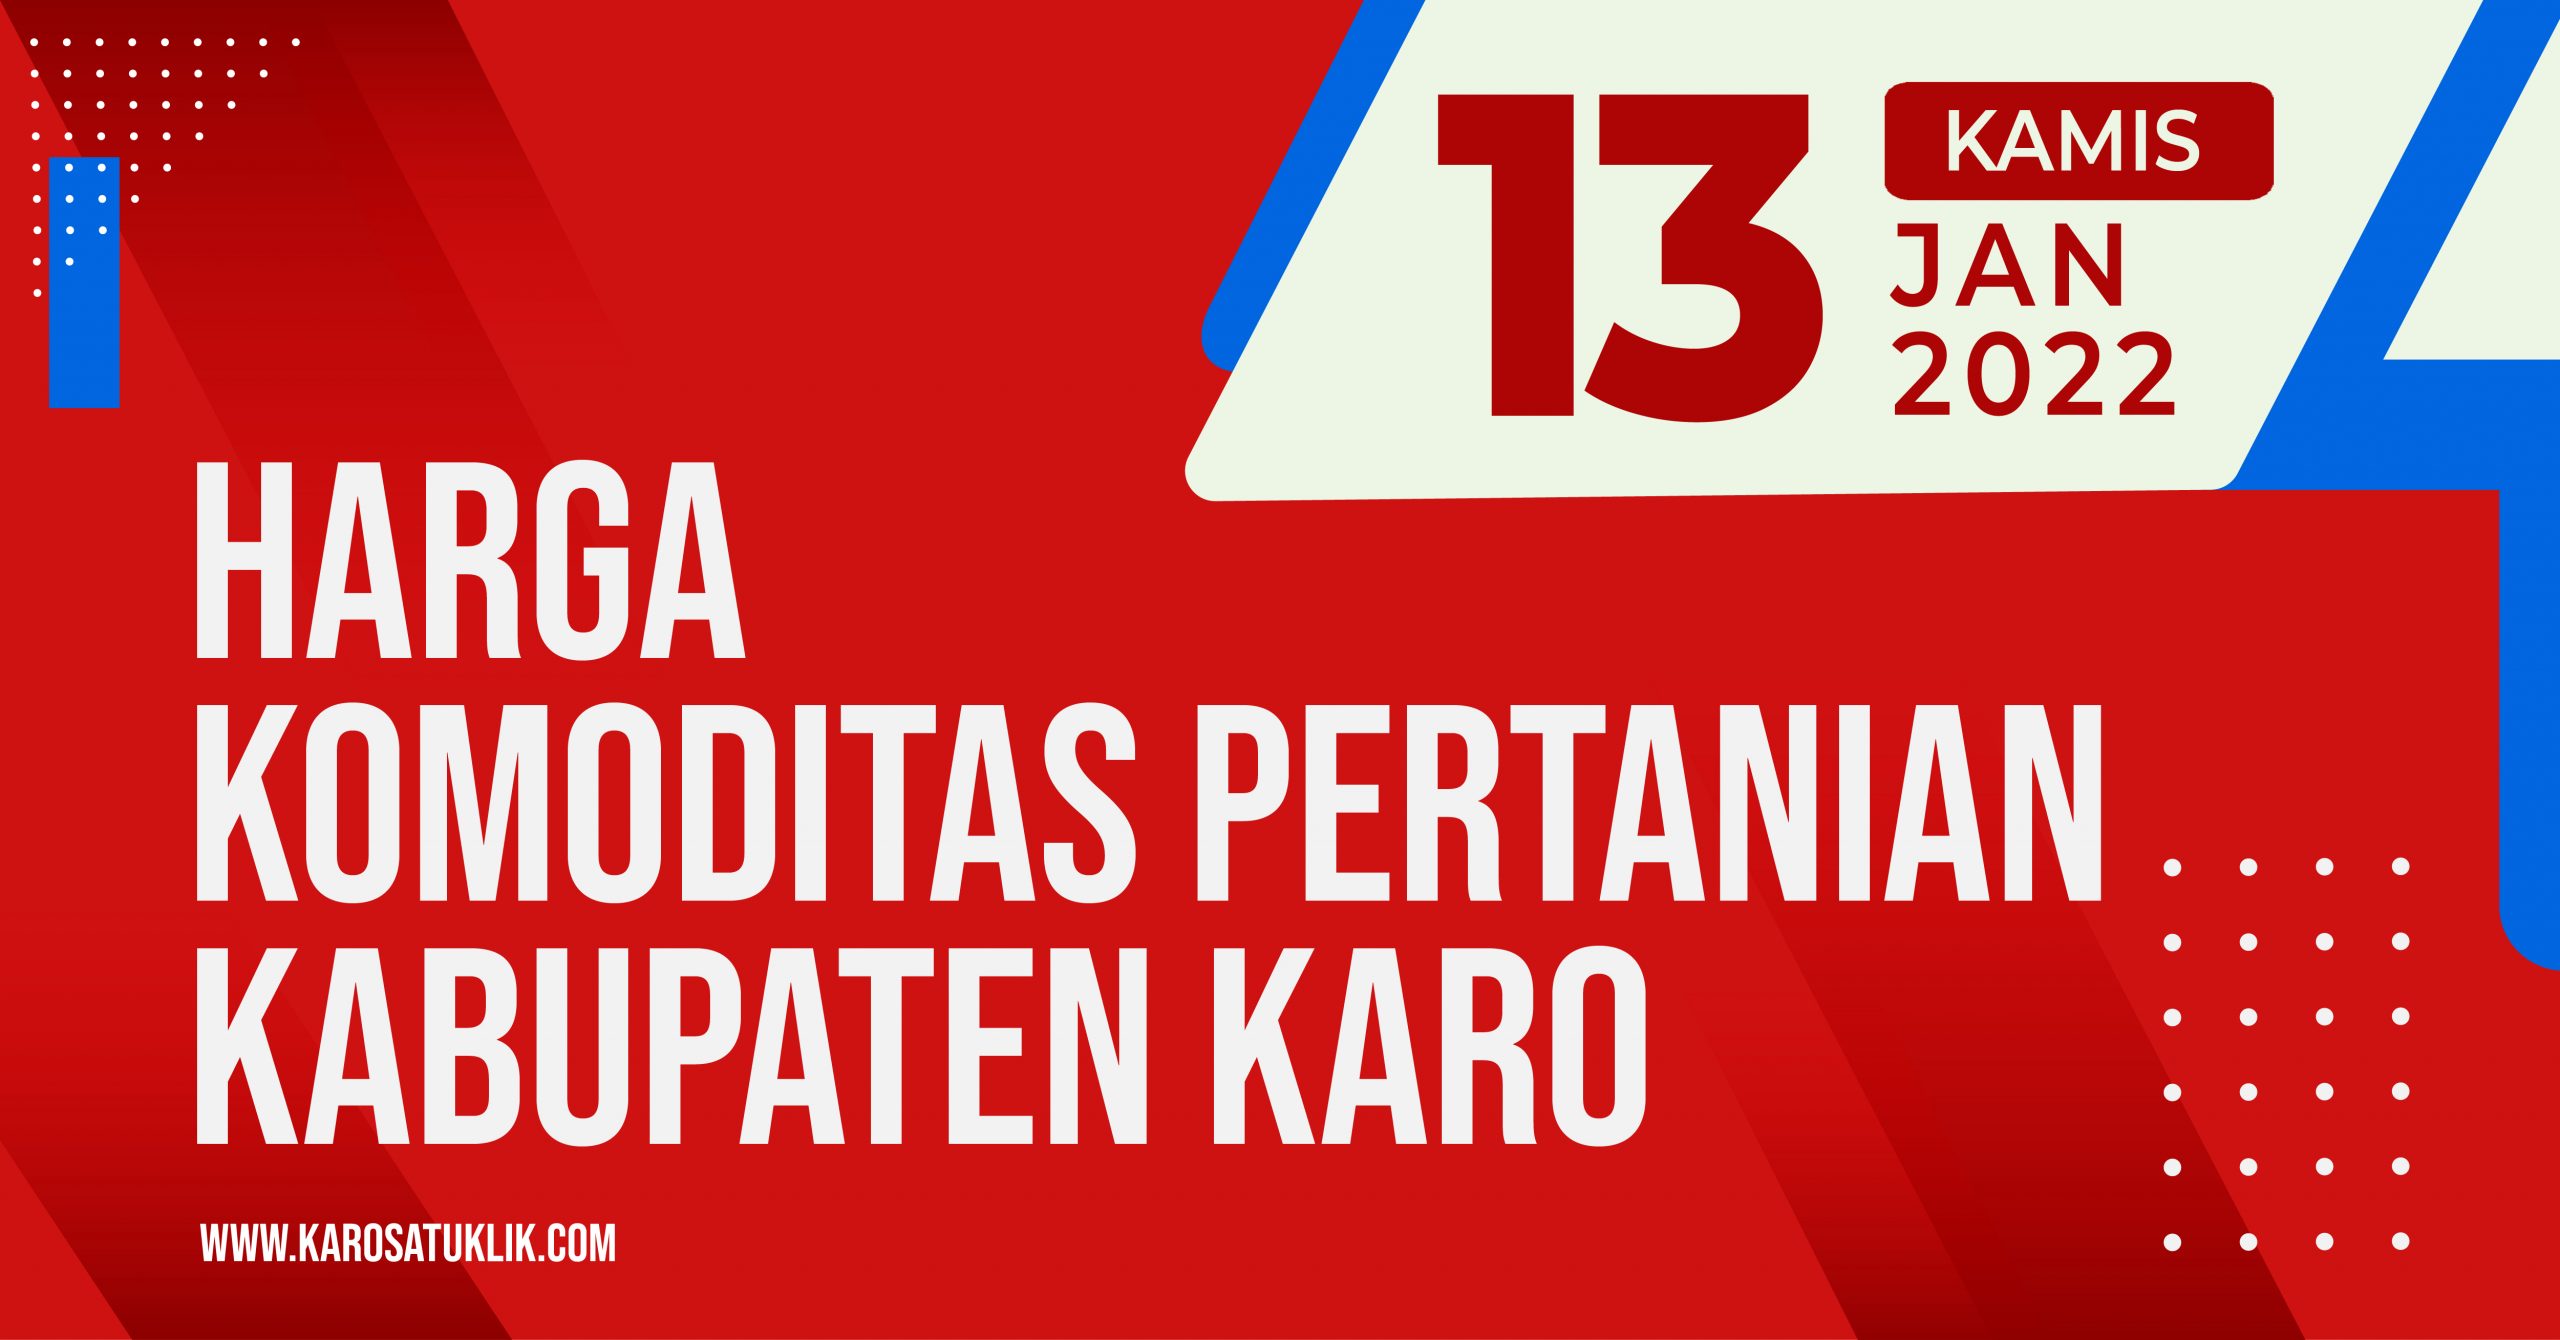 Daftar Harga Komoditas Pertanian Kabupaten Karo, 13 Januari 2022